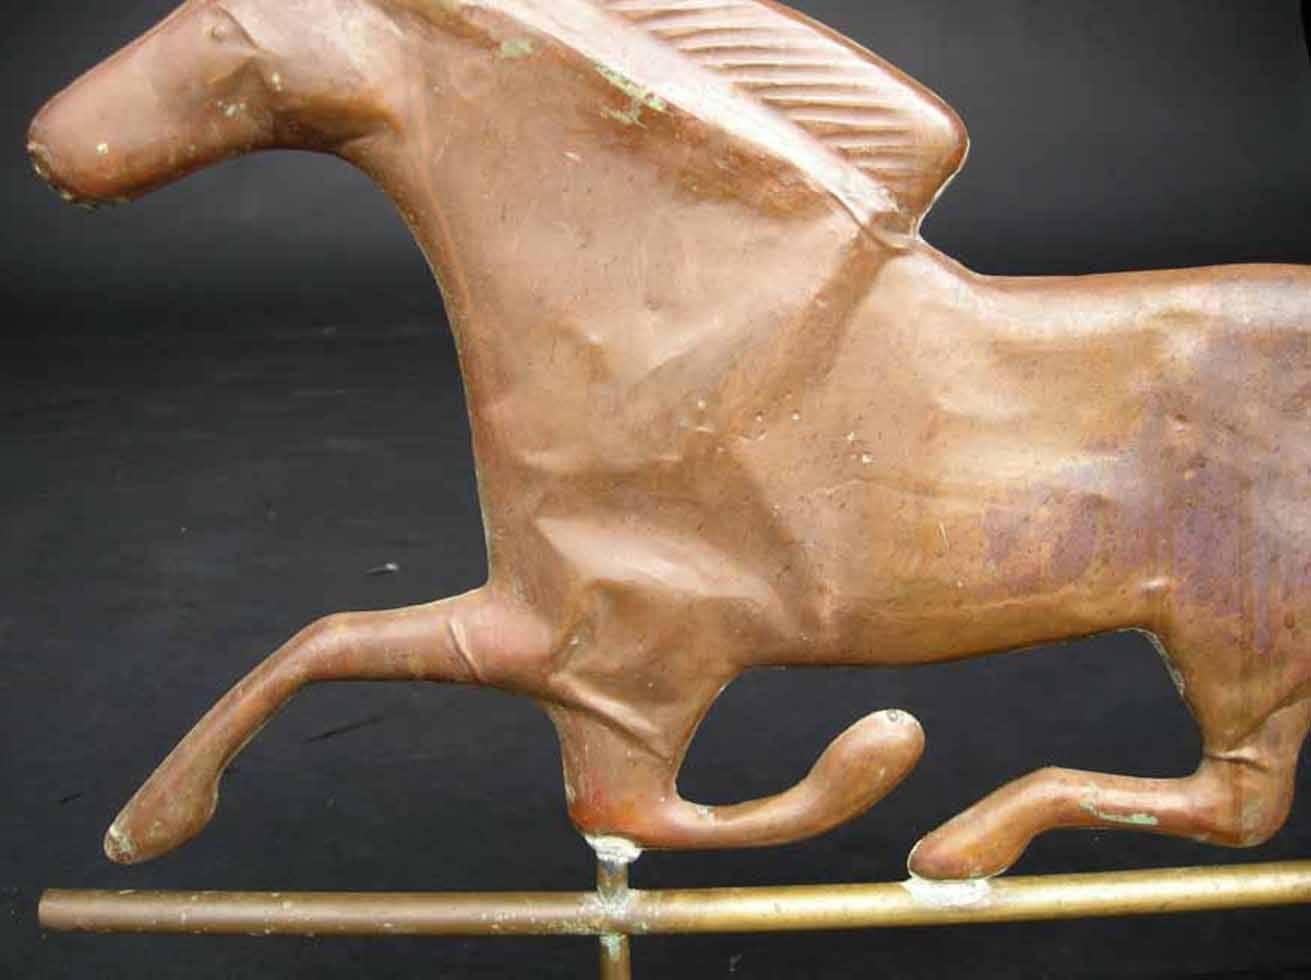 antique horse weathervane